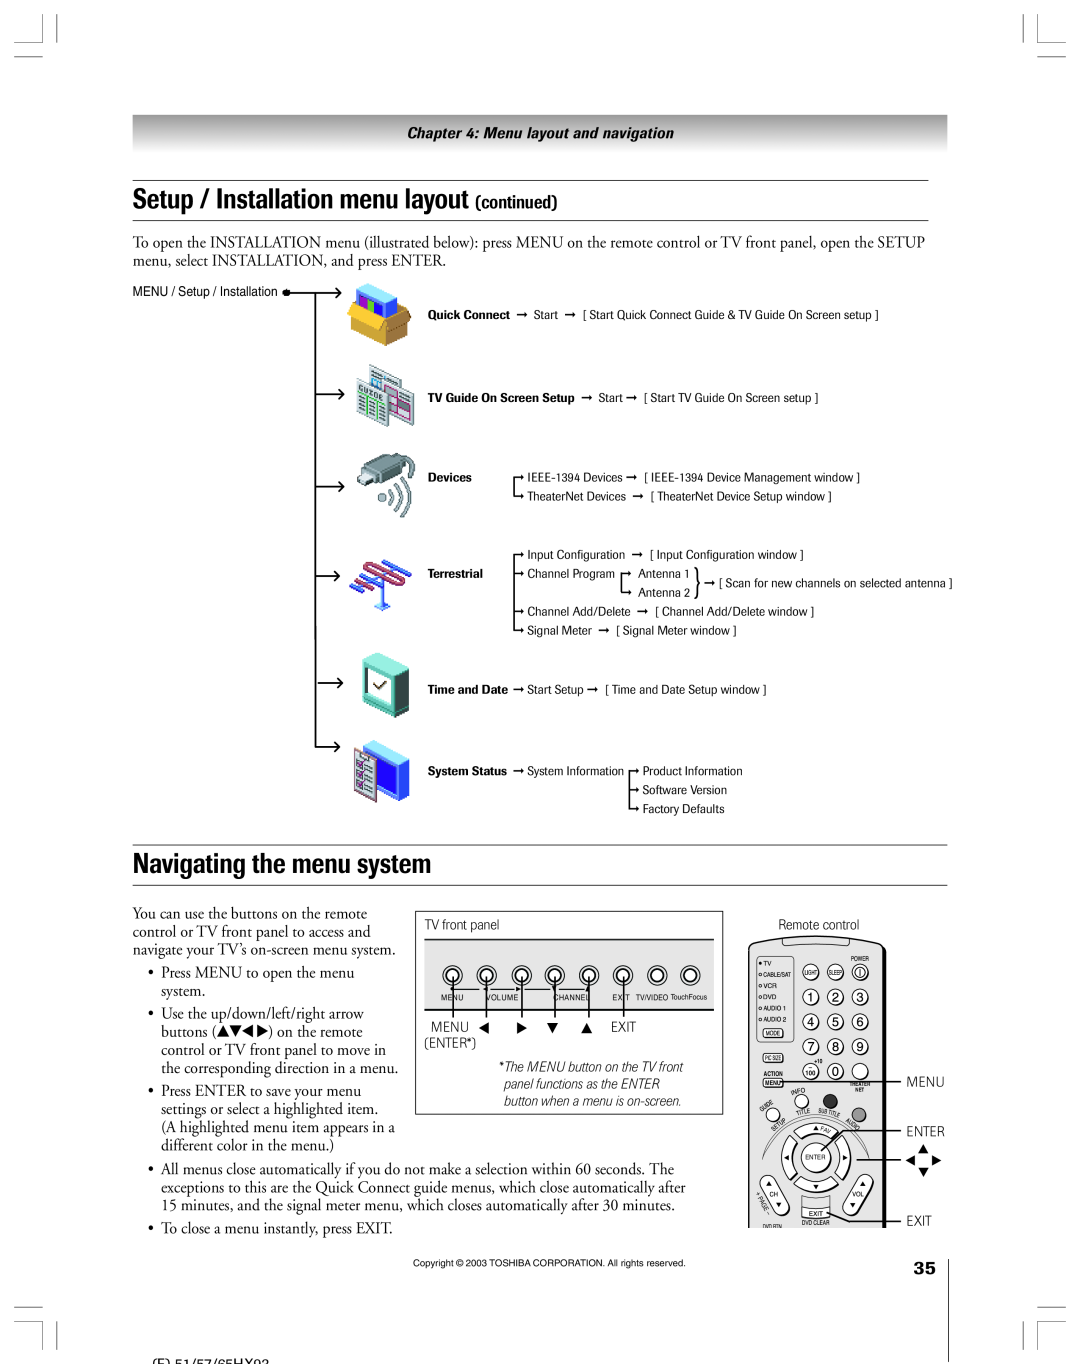 Toshiba 51HX93 Setup / Installation menu layout continued, Navigating the menu system, Press MENU to open the menu system 